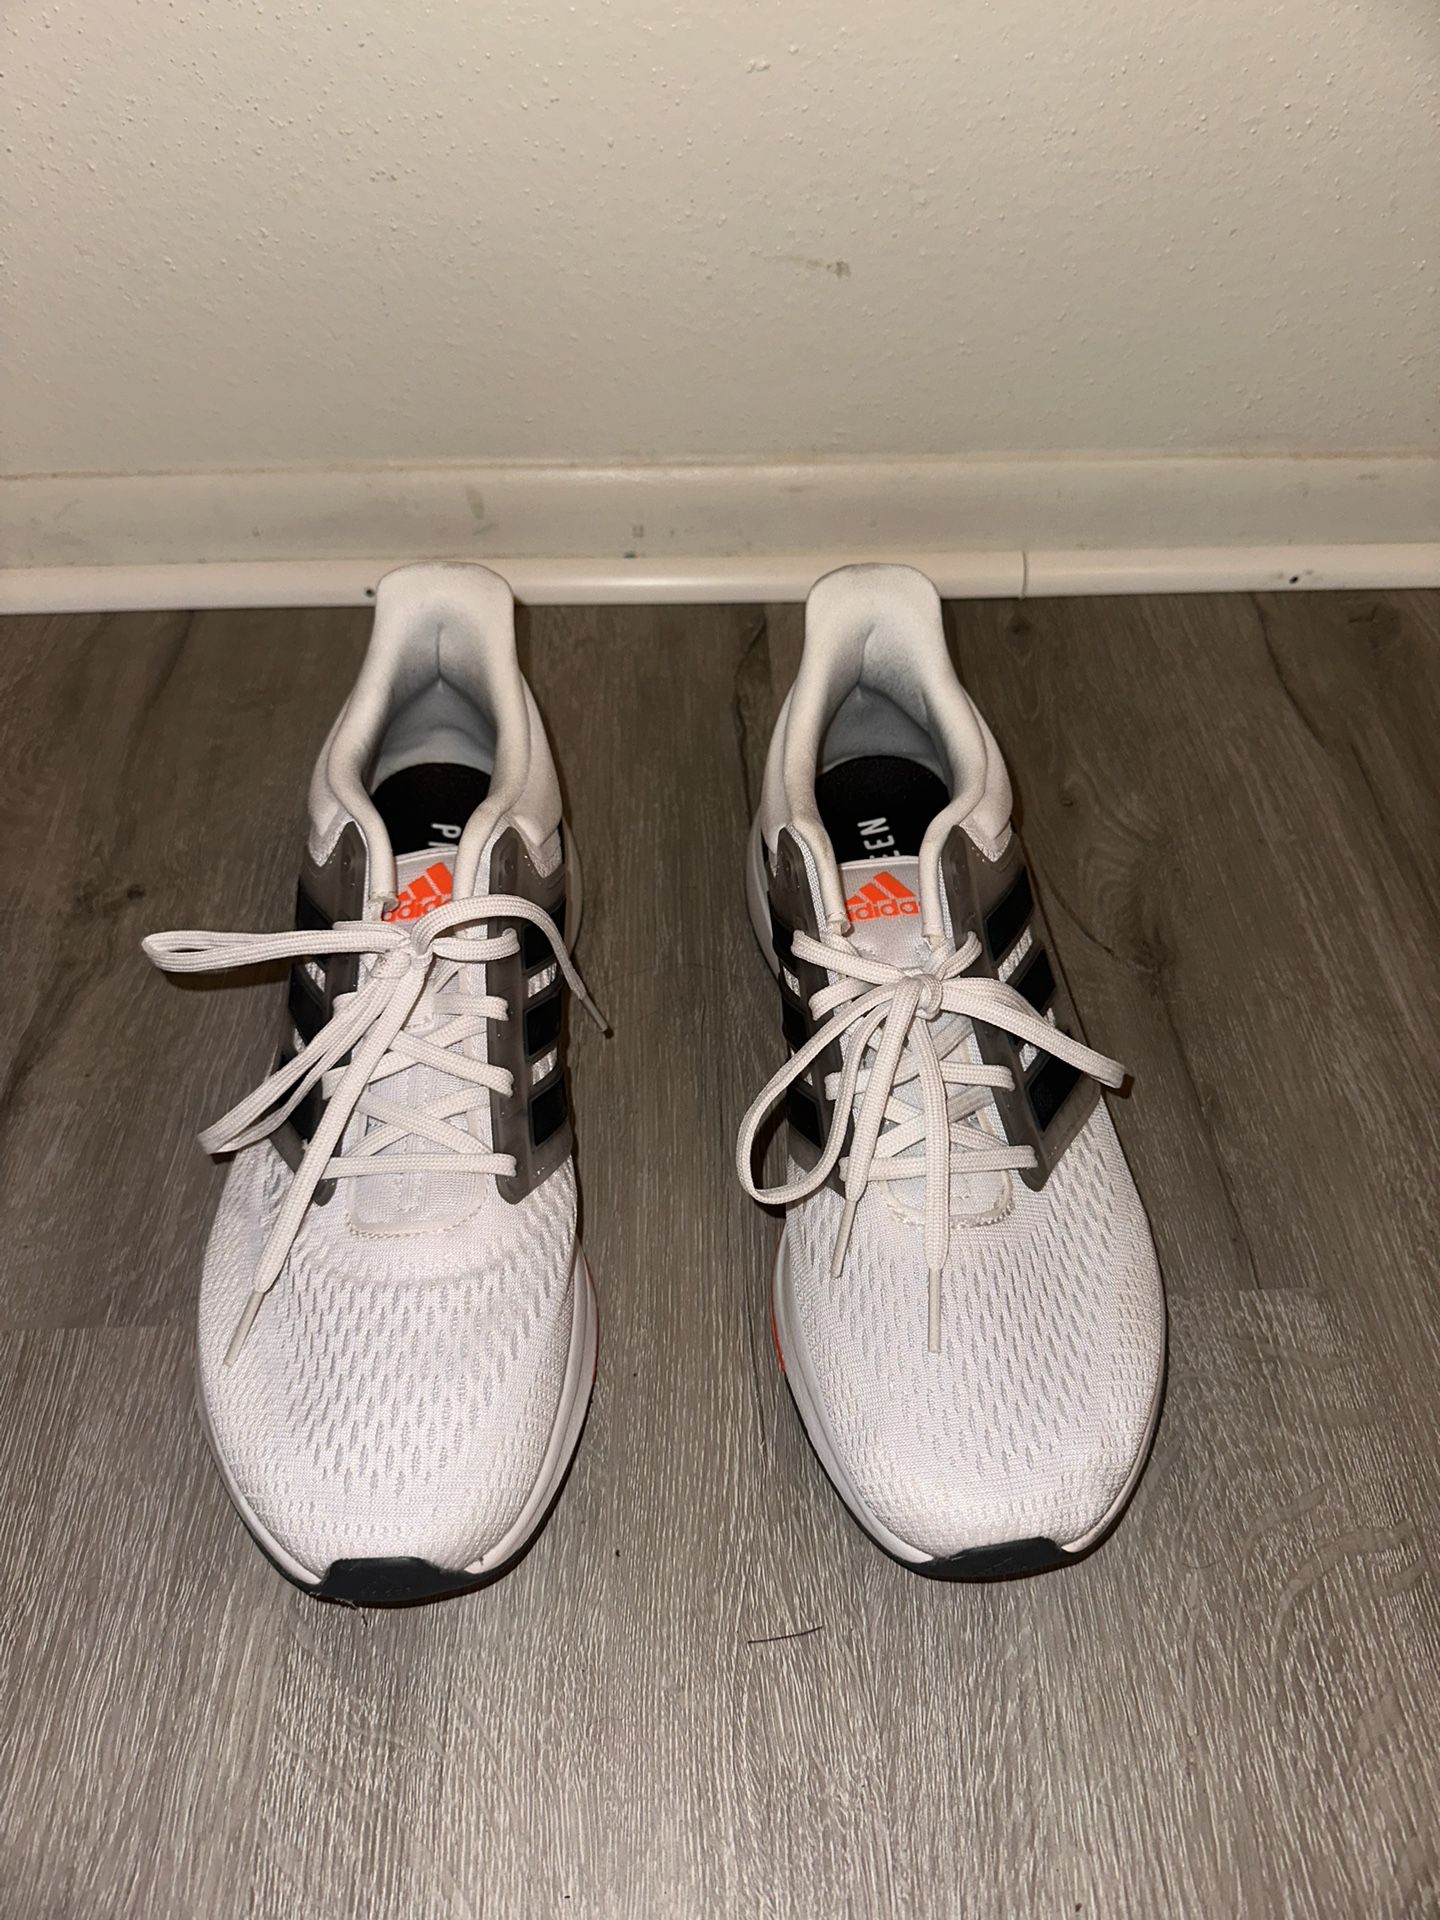 Men’s Adidas Primegreen Running Shoes (Size 11)